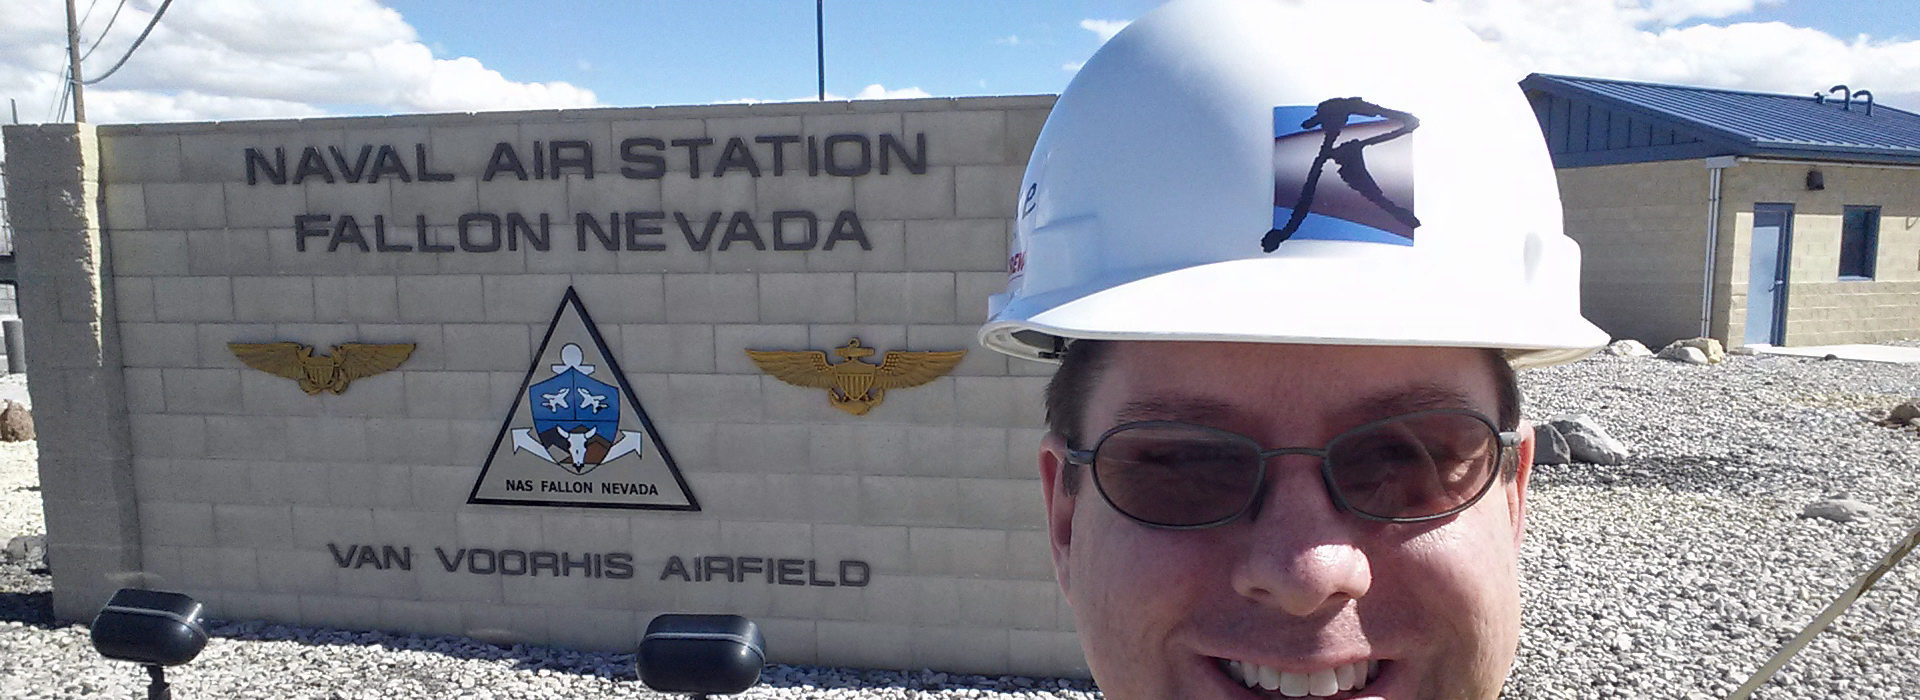 3D laser scanning at Fallon Navel air station, Nevada Top Gun